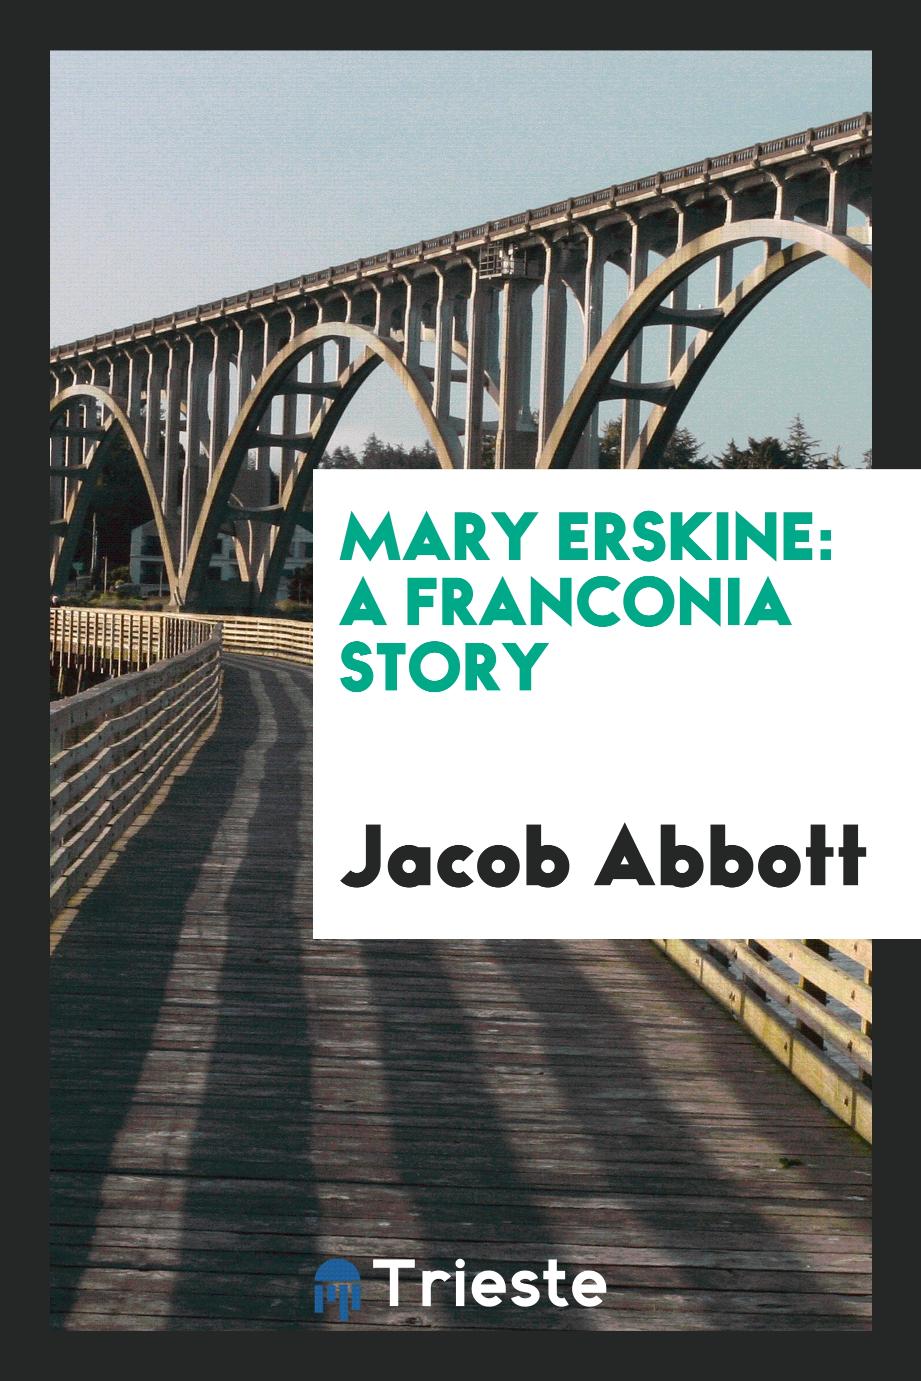 Mary Erskine: A Franconia Story